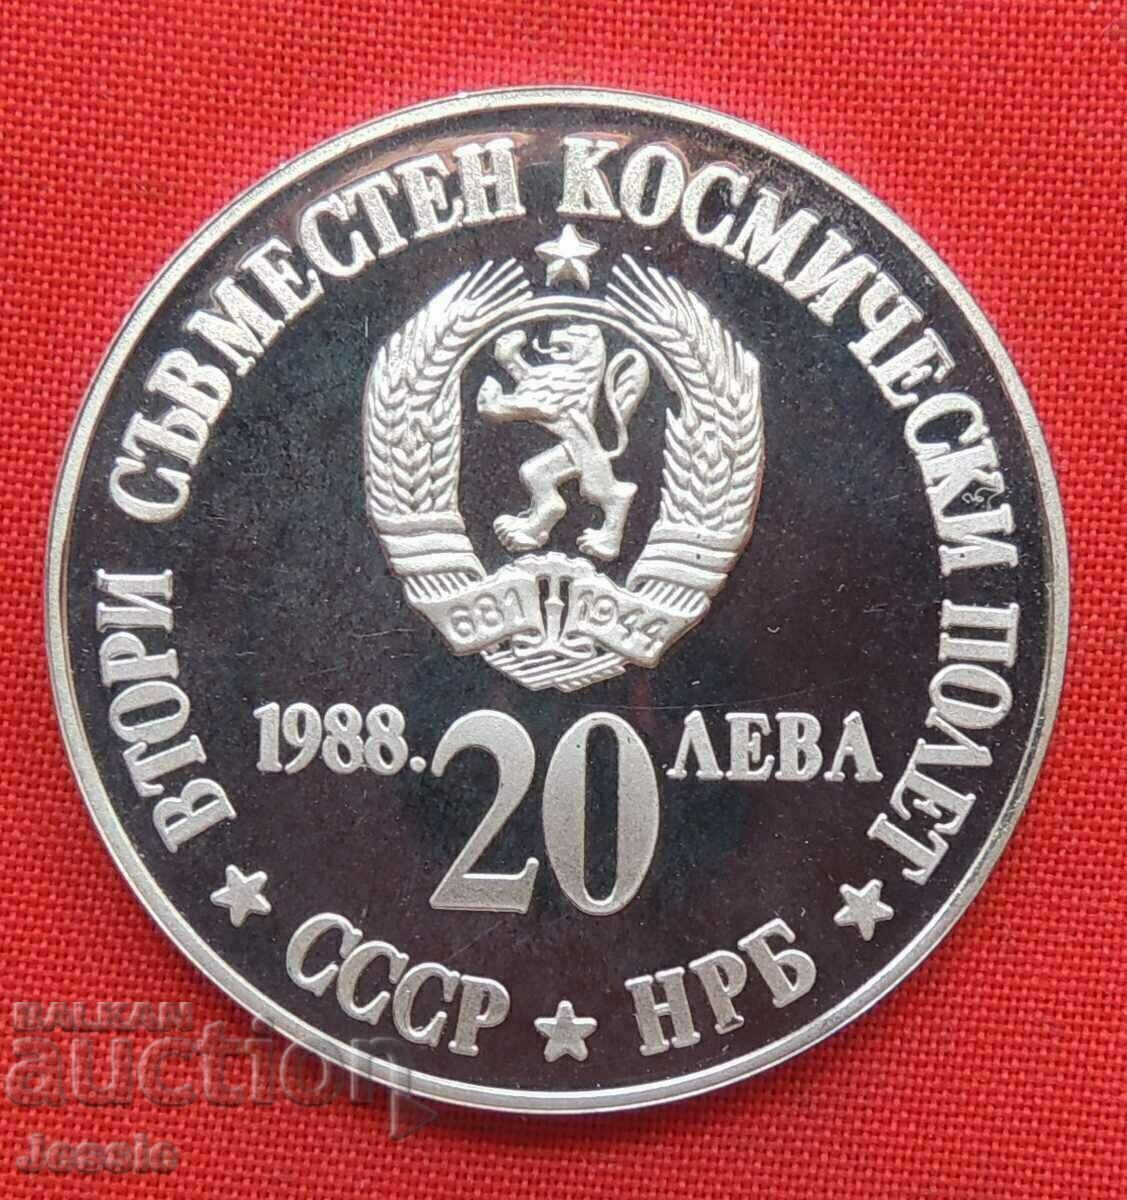 20 BGN 1988 Δεύτερη πτήση ΕΣΣΔ - NRB Νομισματοκοπείο #1 ΕΚΠΤΩΜΕΝΟ ΣΕ BNB